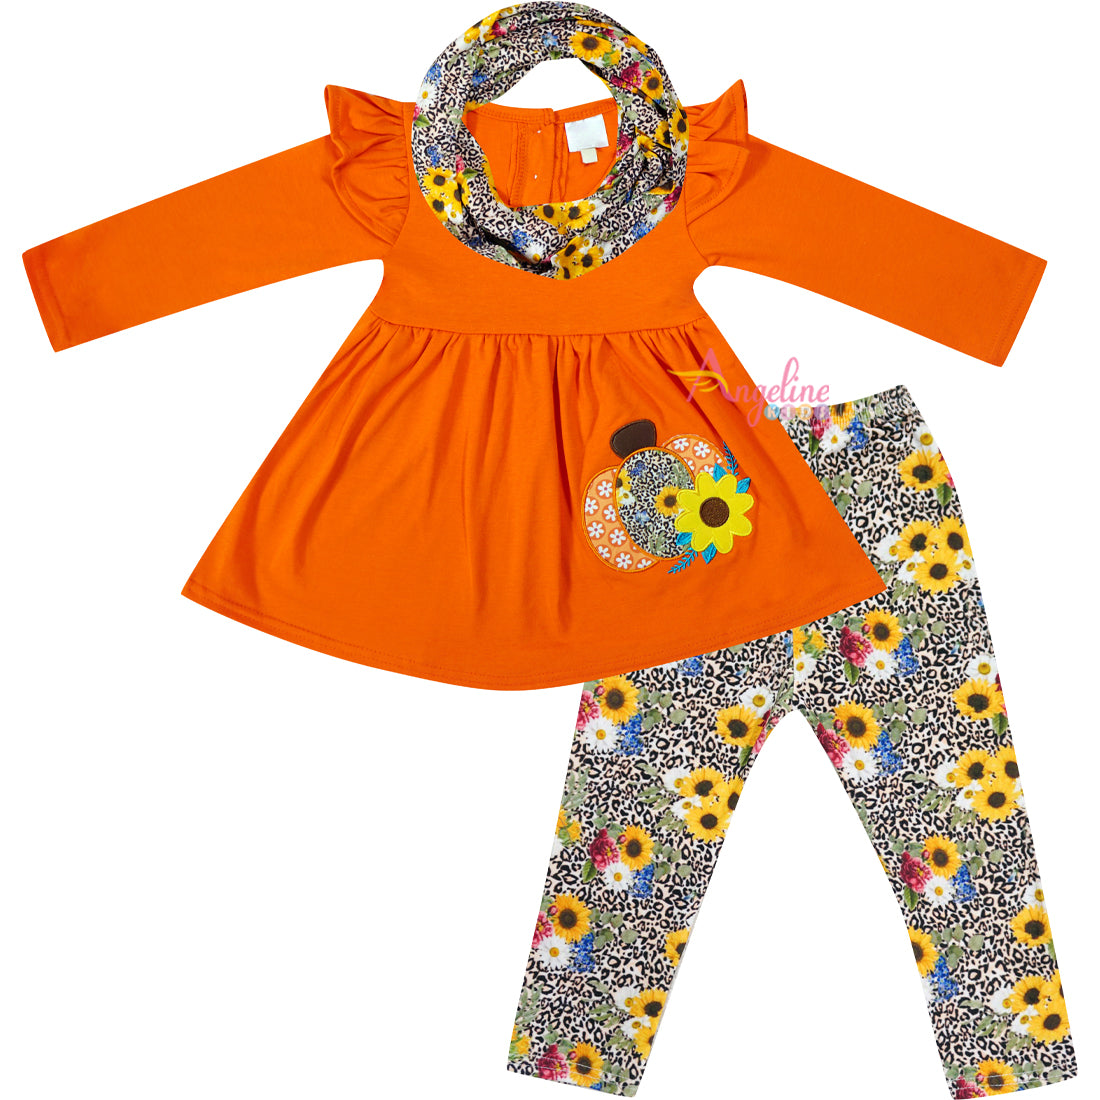 Baby Toddler Little Girls Fall Sunflower Cheetah Pumpkin Scarf Outfit - Tangerine Orange - Angeline Kids